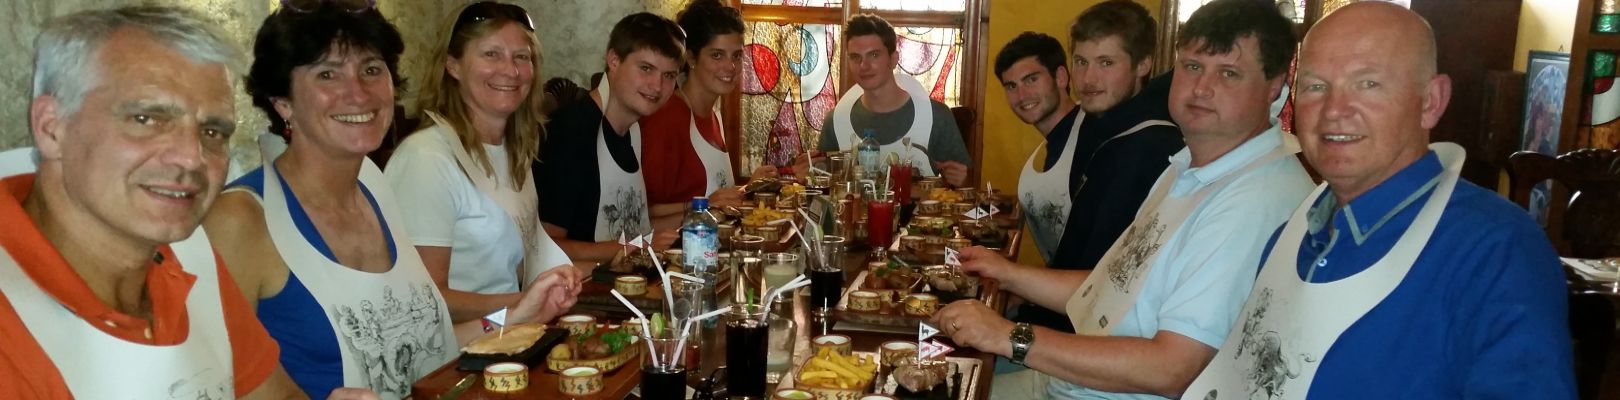 restaurants - voyage pérou bolivie